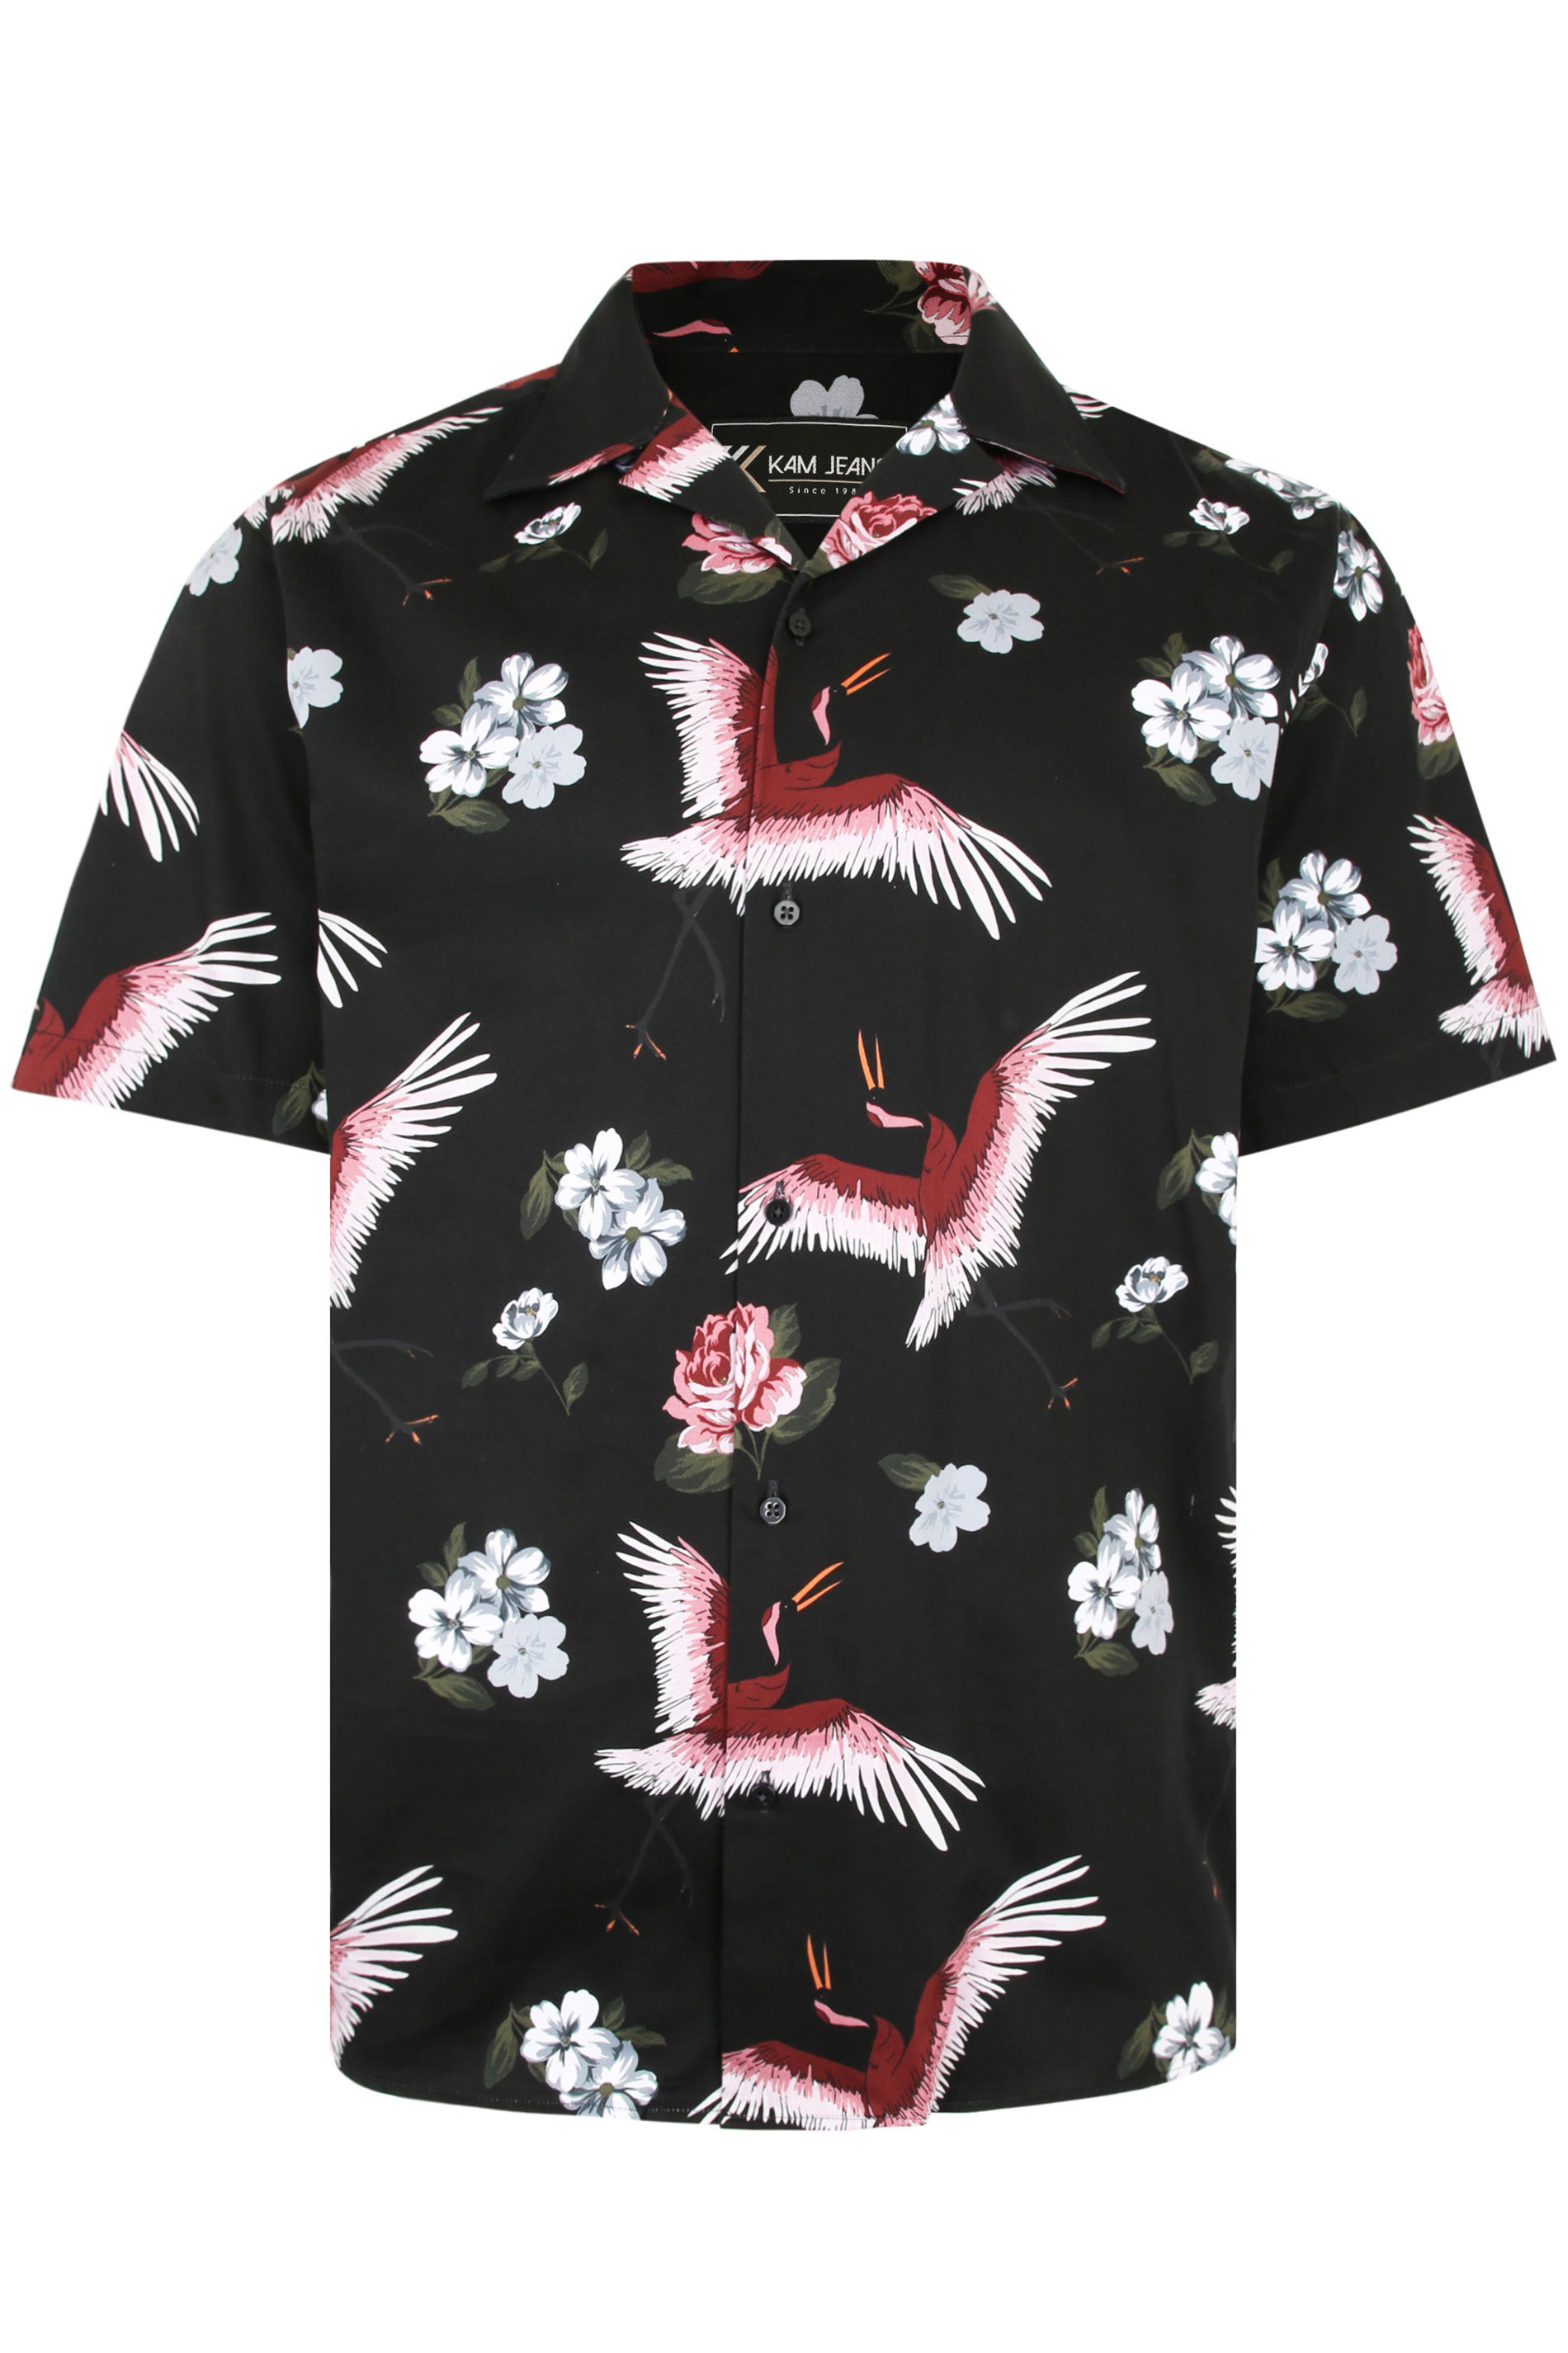 KAM Big & Tall Black Floral Flamingo Print Shirt_F.jpg